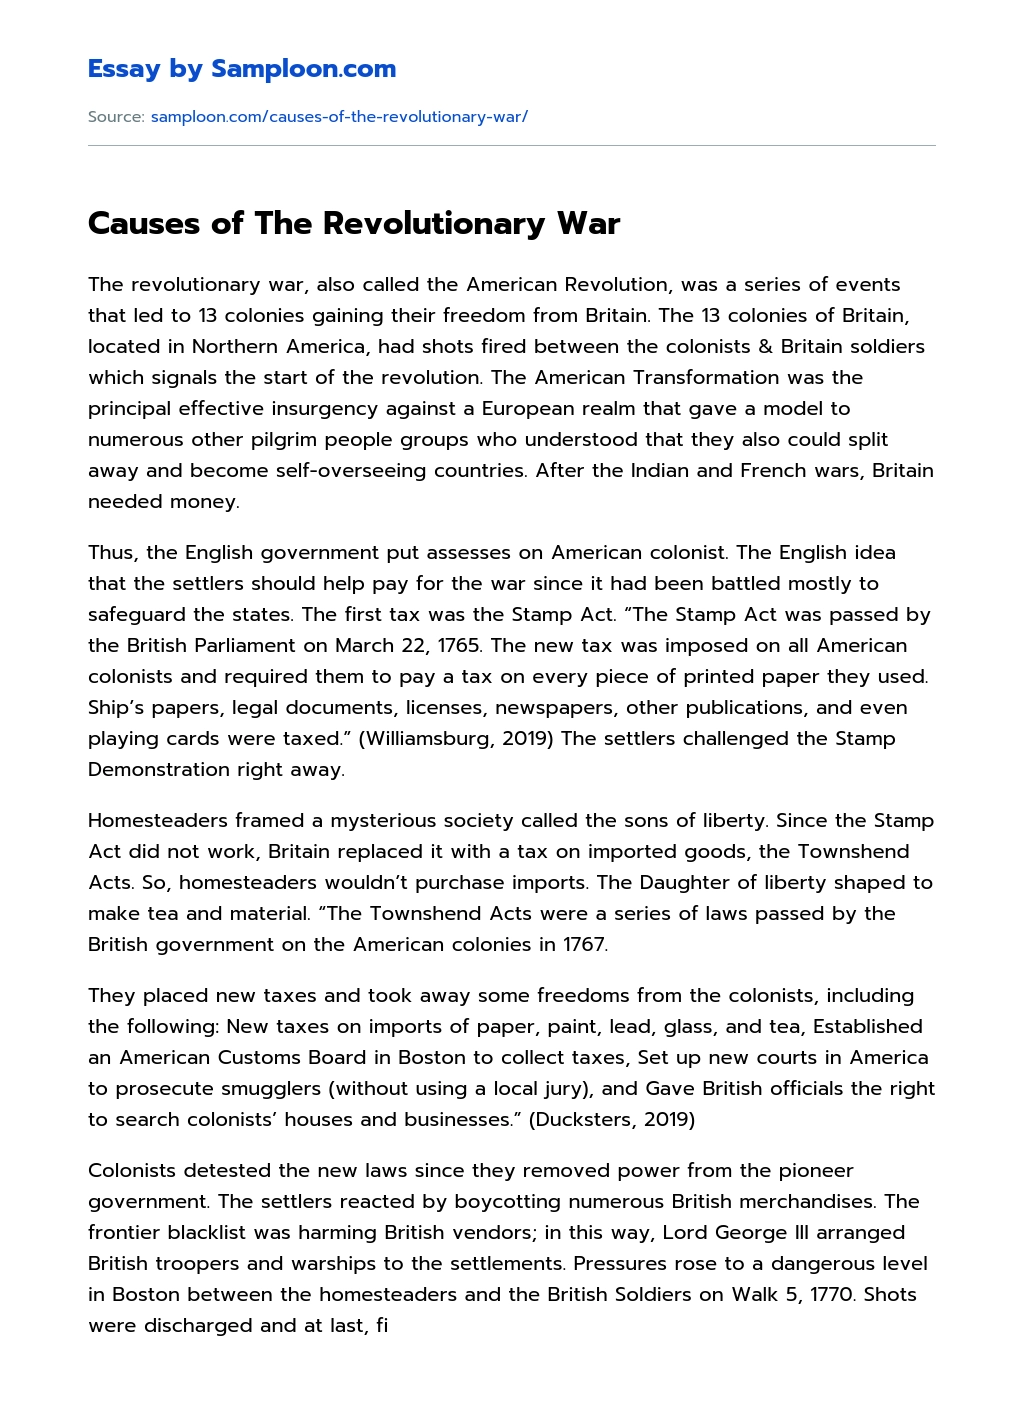 causes of the revolutionary war essay